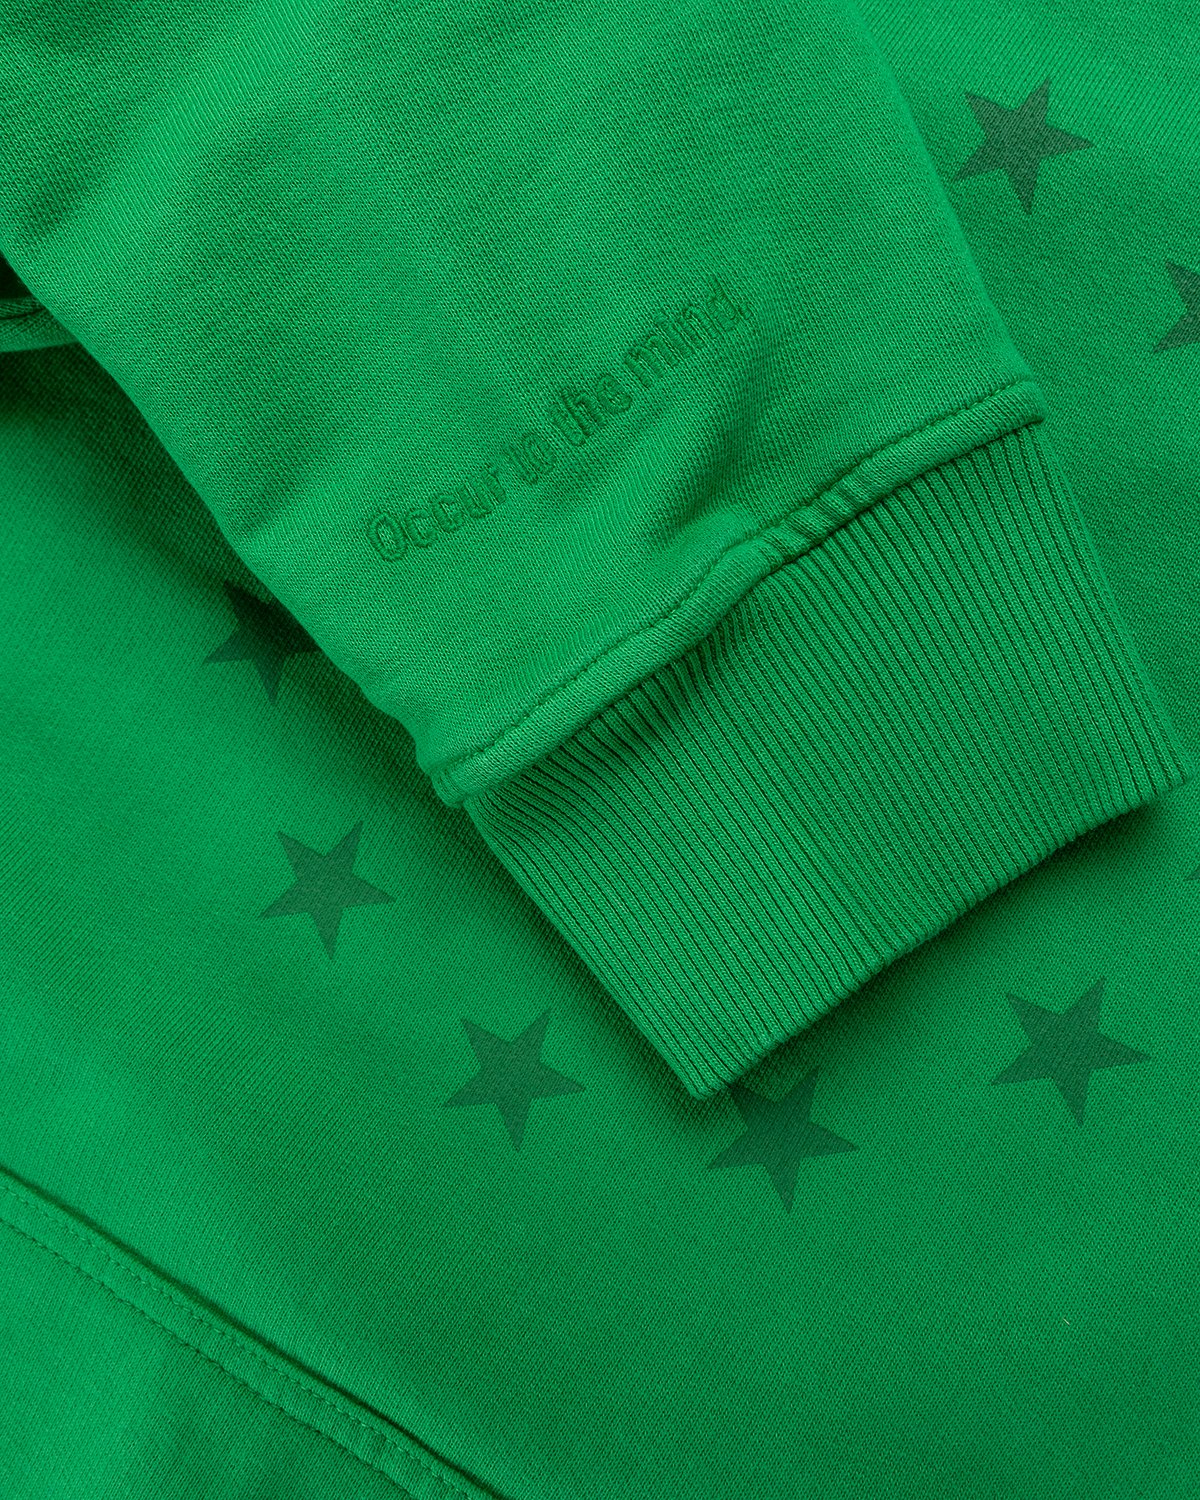 Souvenir - Eunify G-Dye Hoodie Fern - Clothing - Green - Image 5